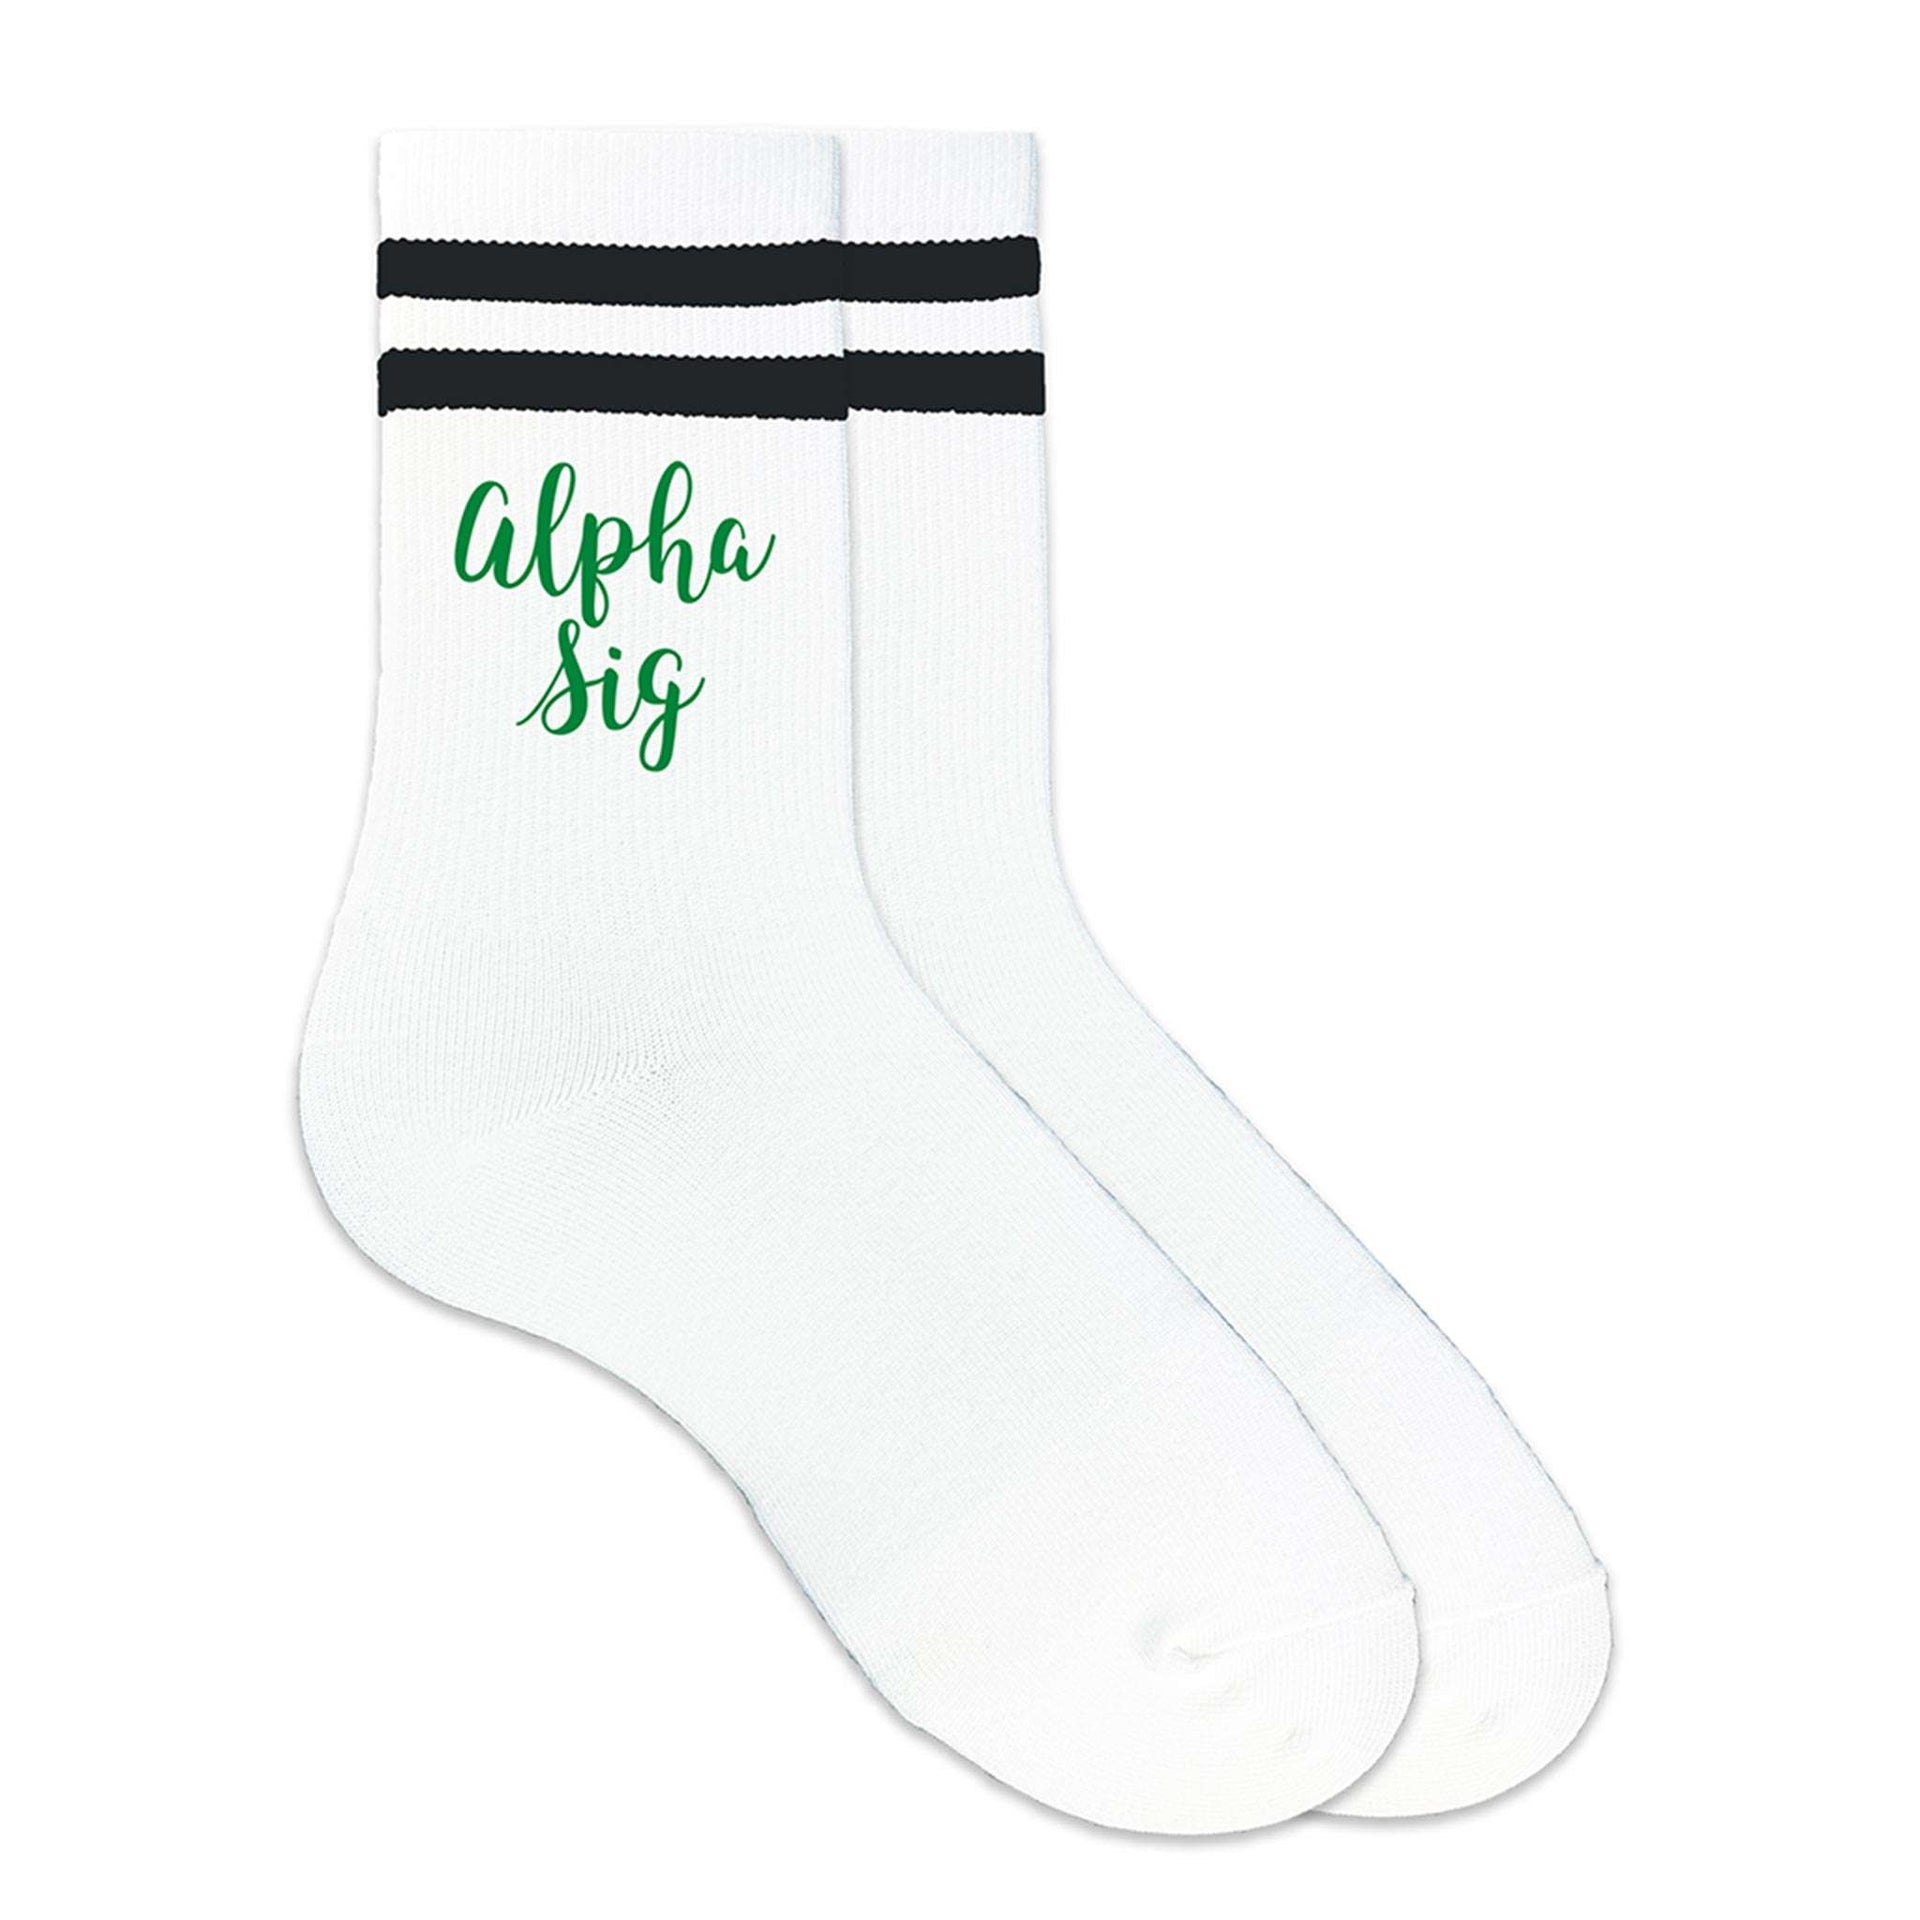 Alpha Sig sorority nickname custom printed on striped crew socks